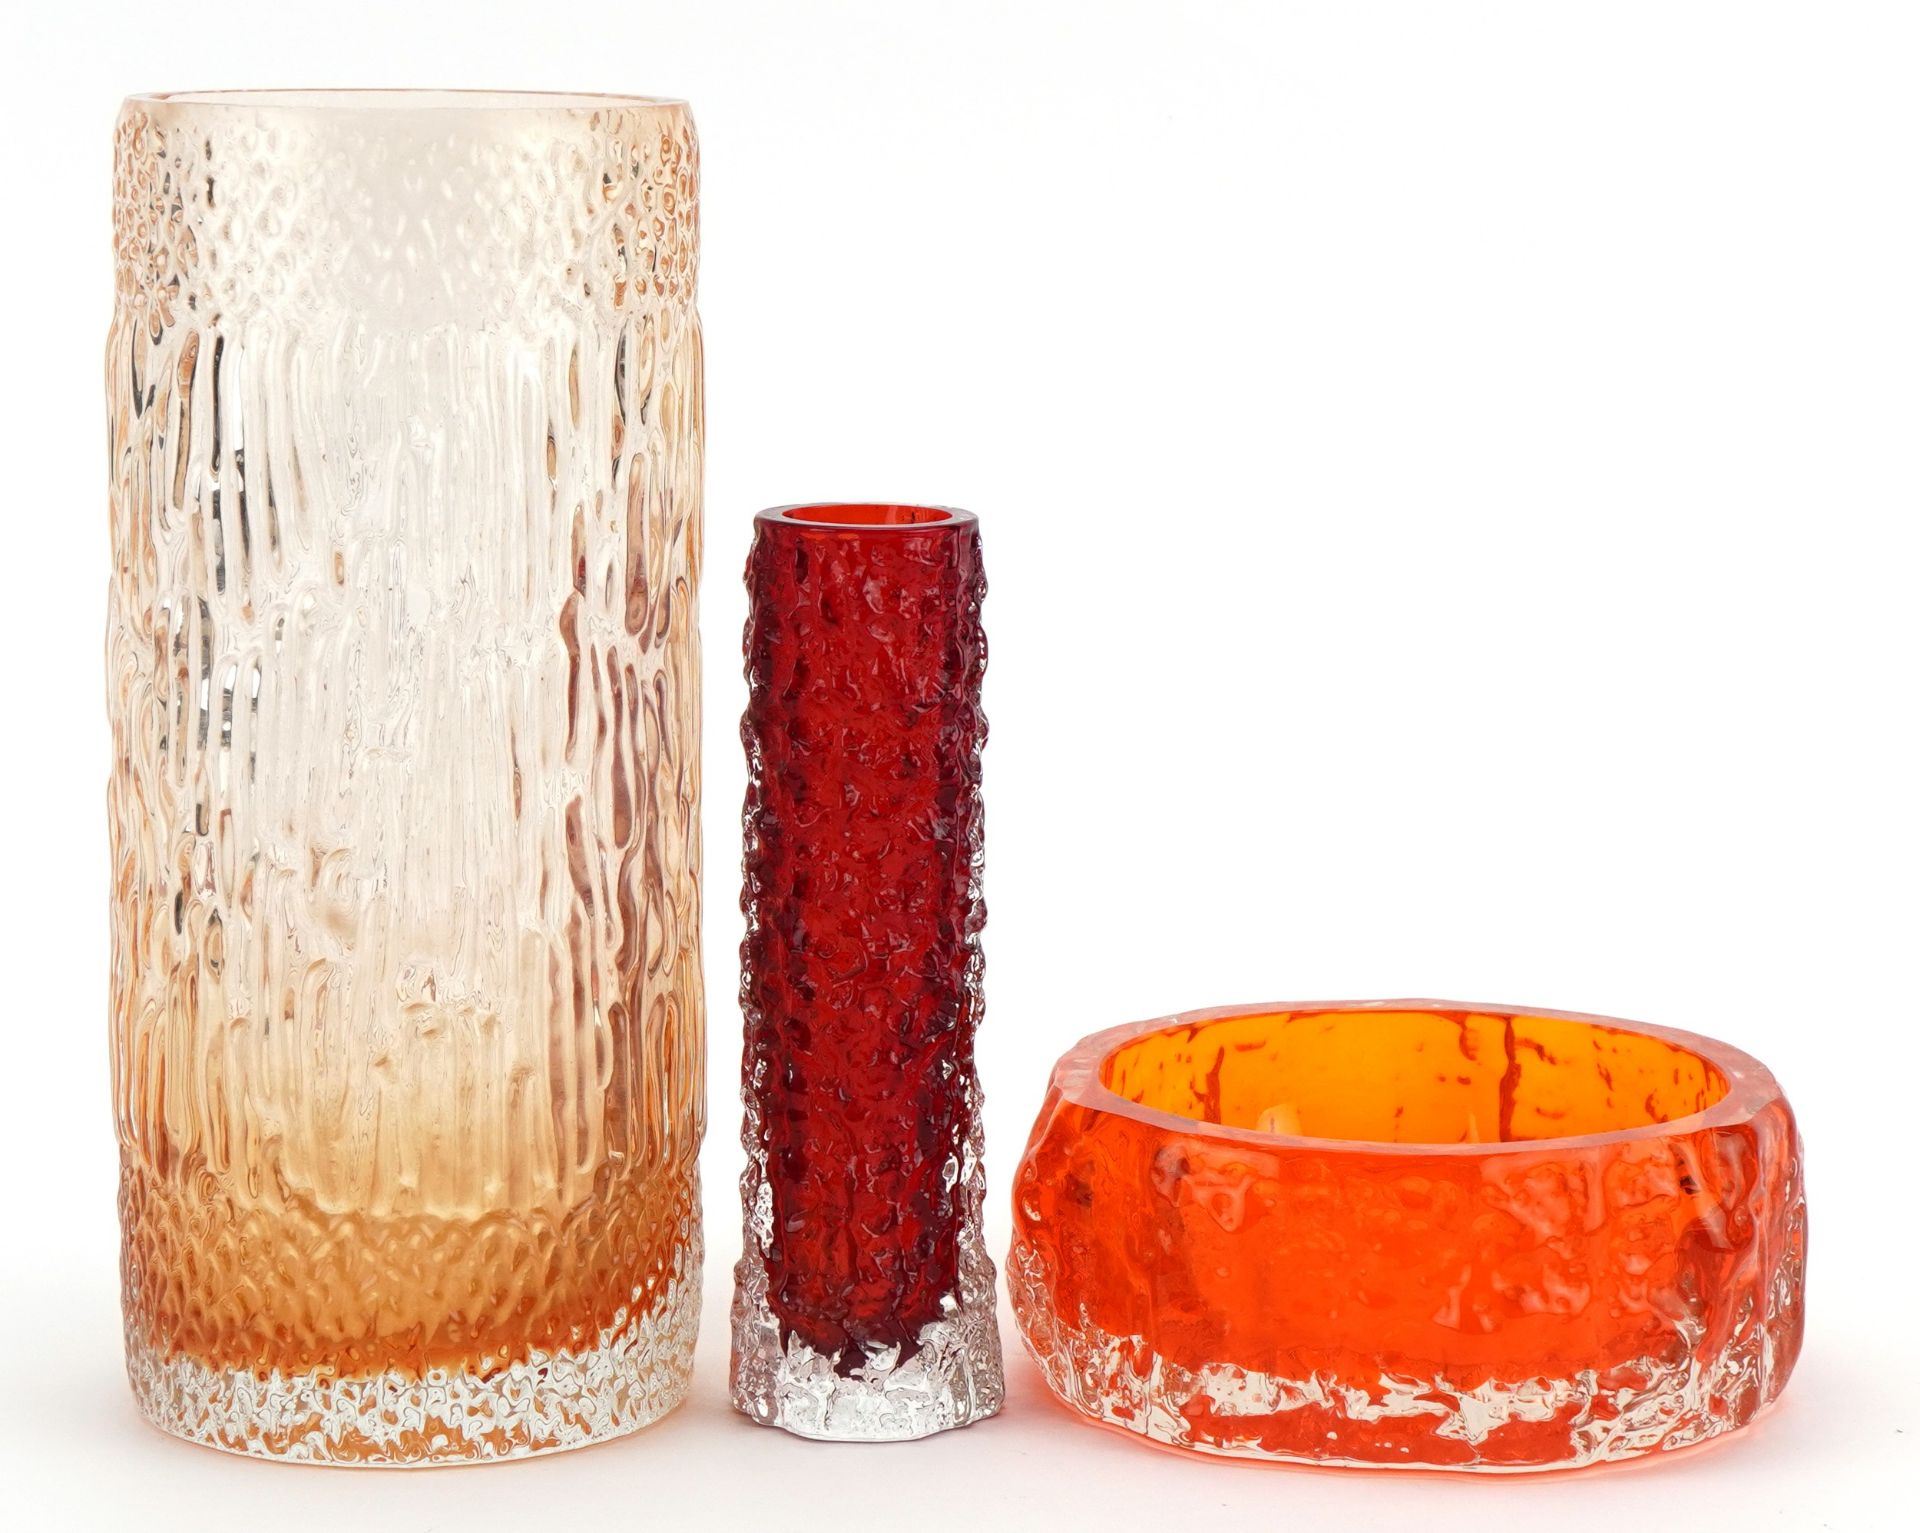 Whitefriars bark design ashtray, red glass vase and similar bark design vase, the largest 21cm high - Image 2 of 3